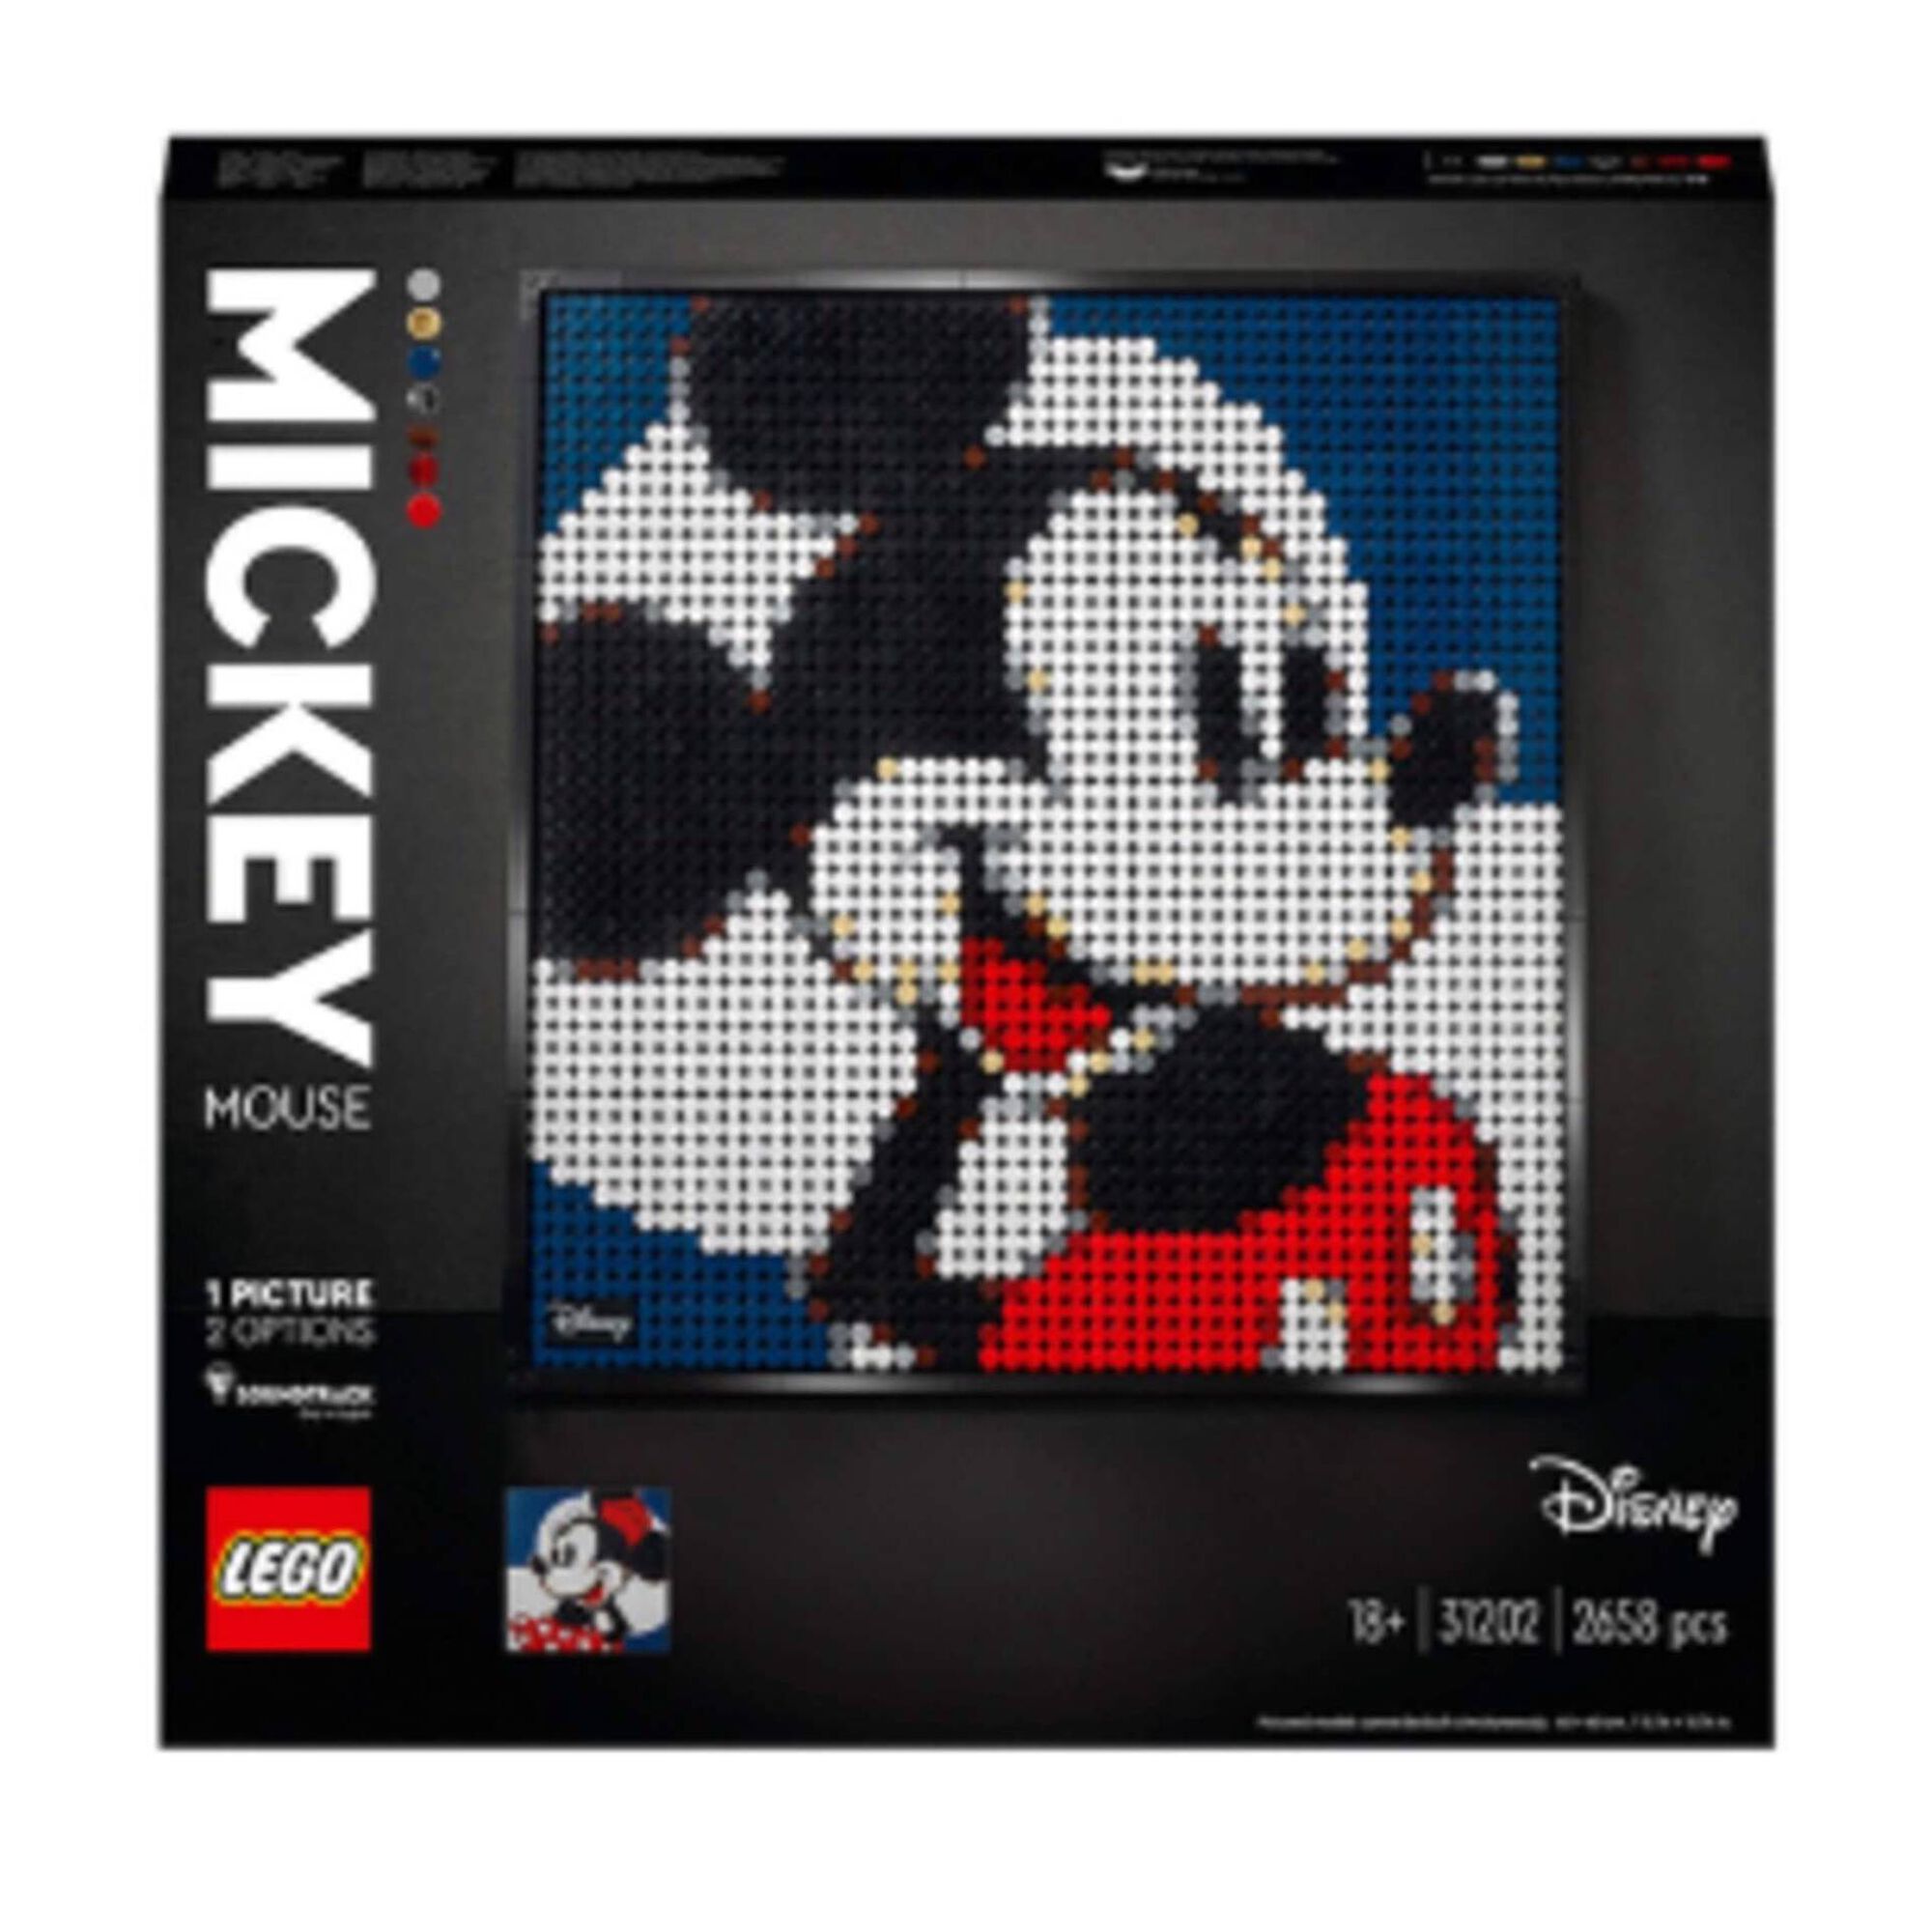 Disney's Mickey Mouse - 31202